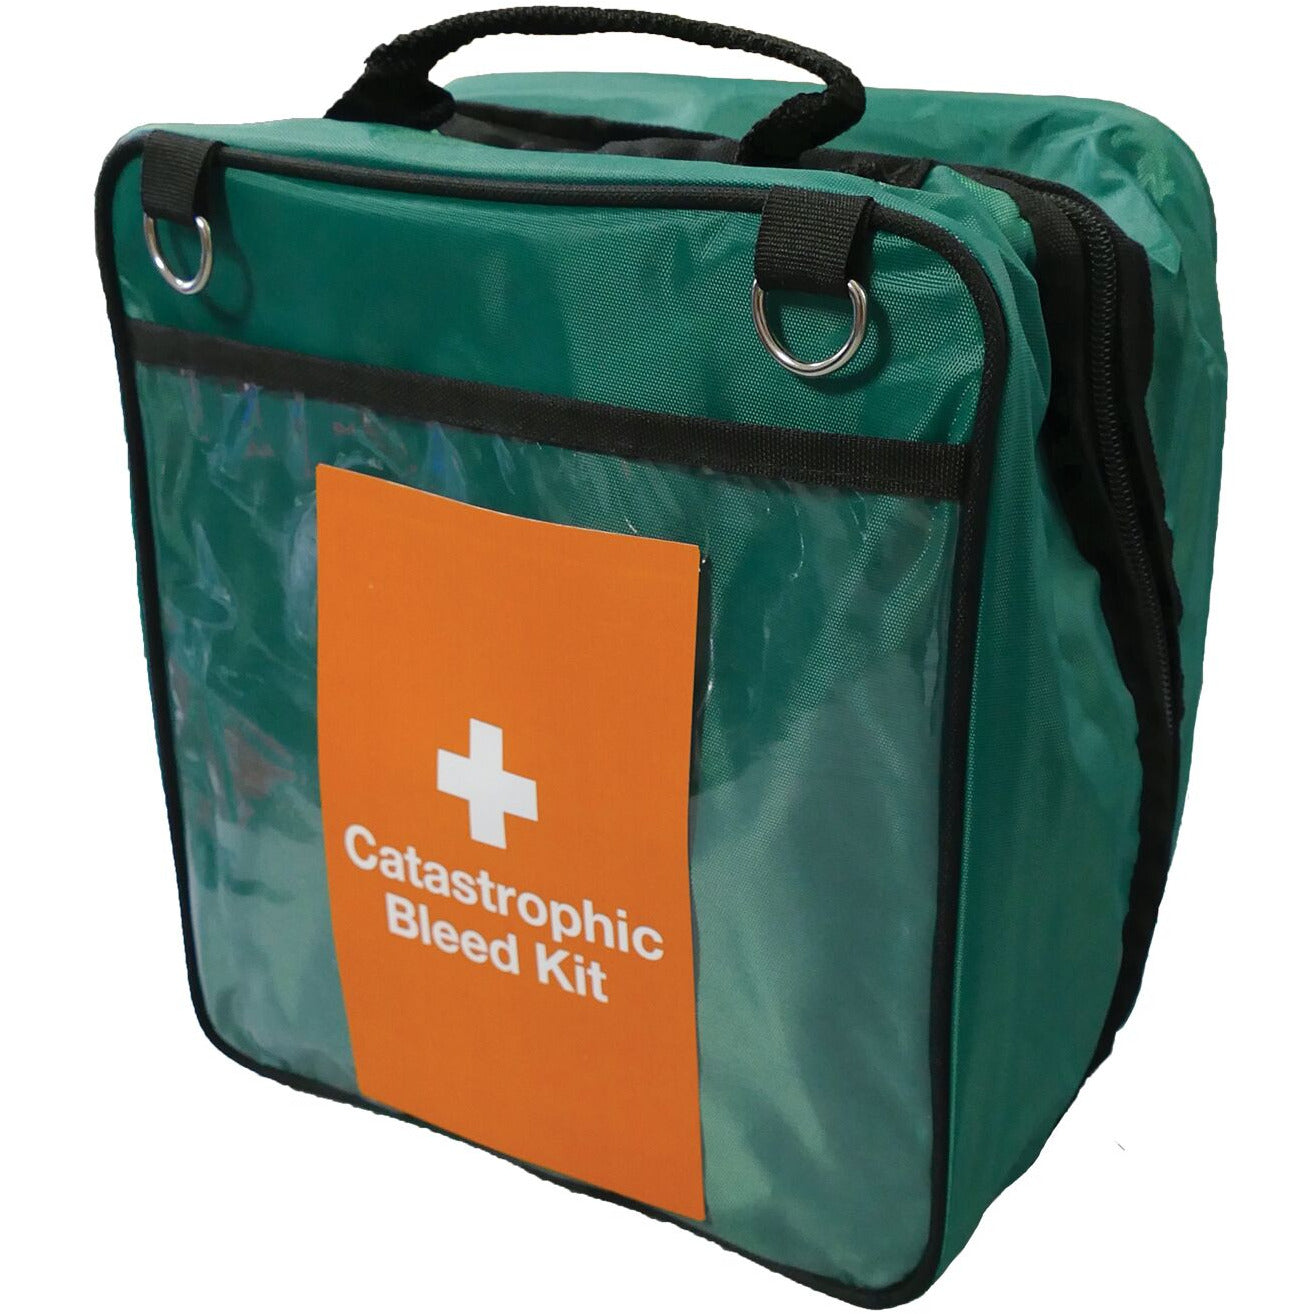 Catastrophic Bleed Kit, Comprehensive in Grab Bag